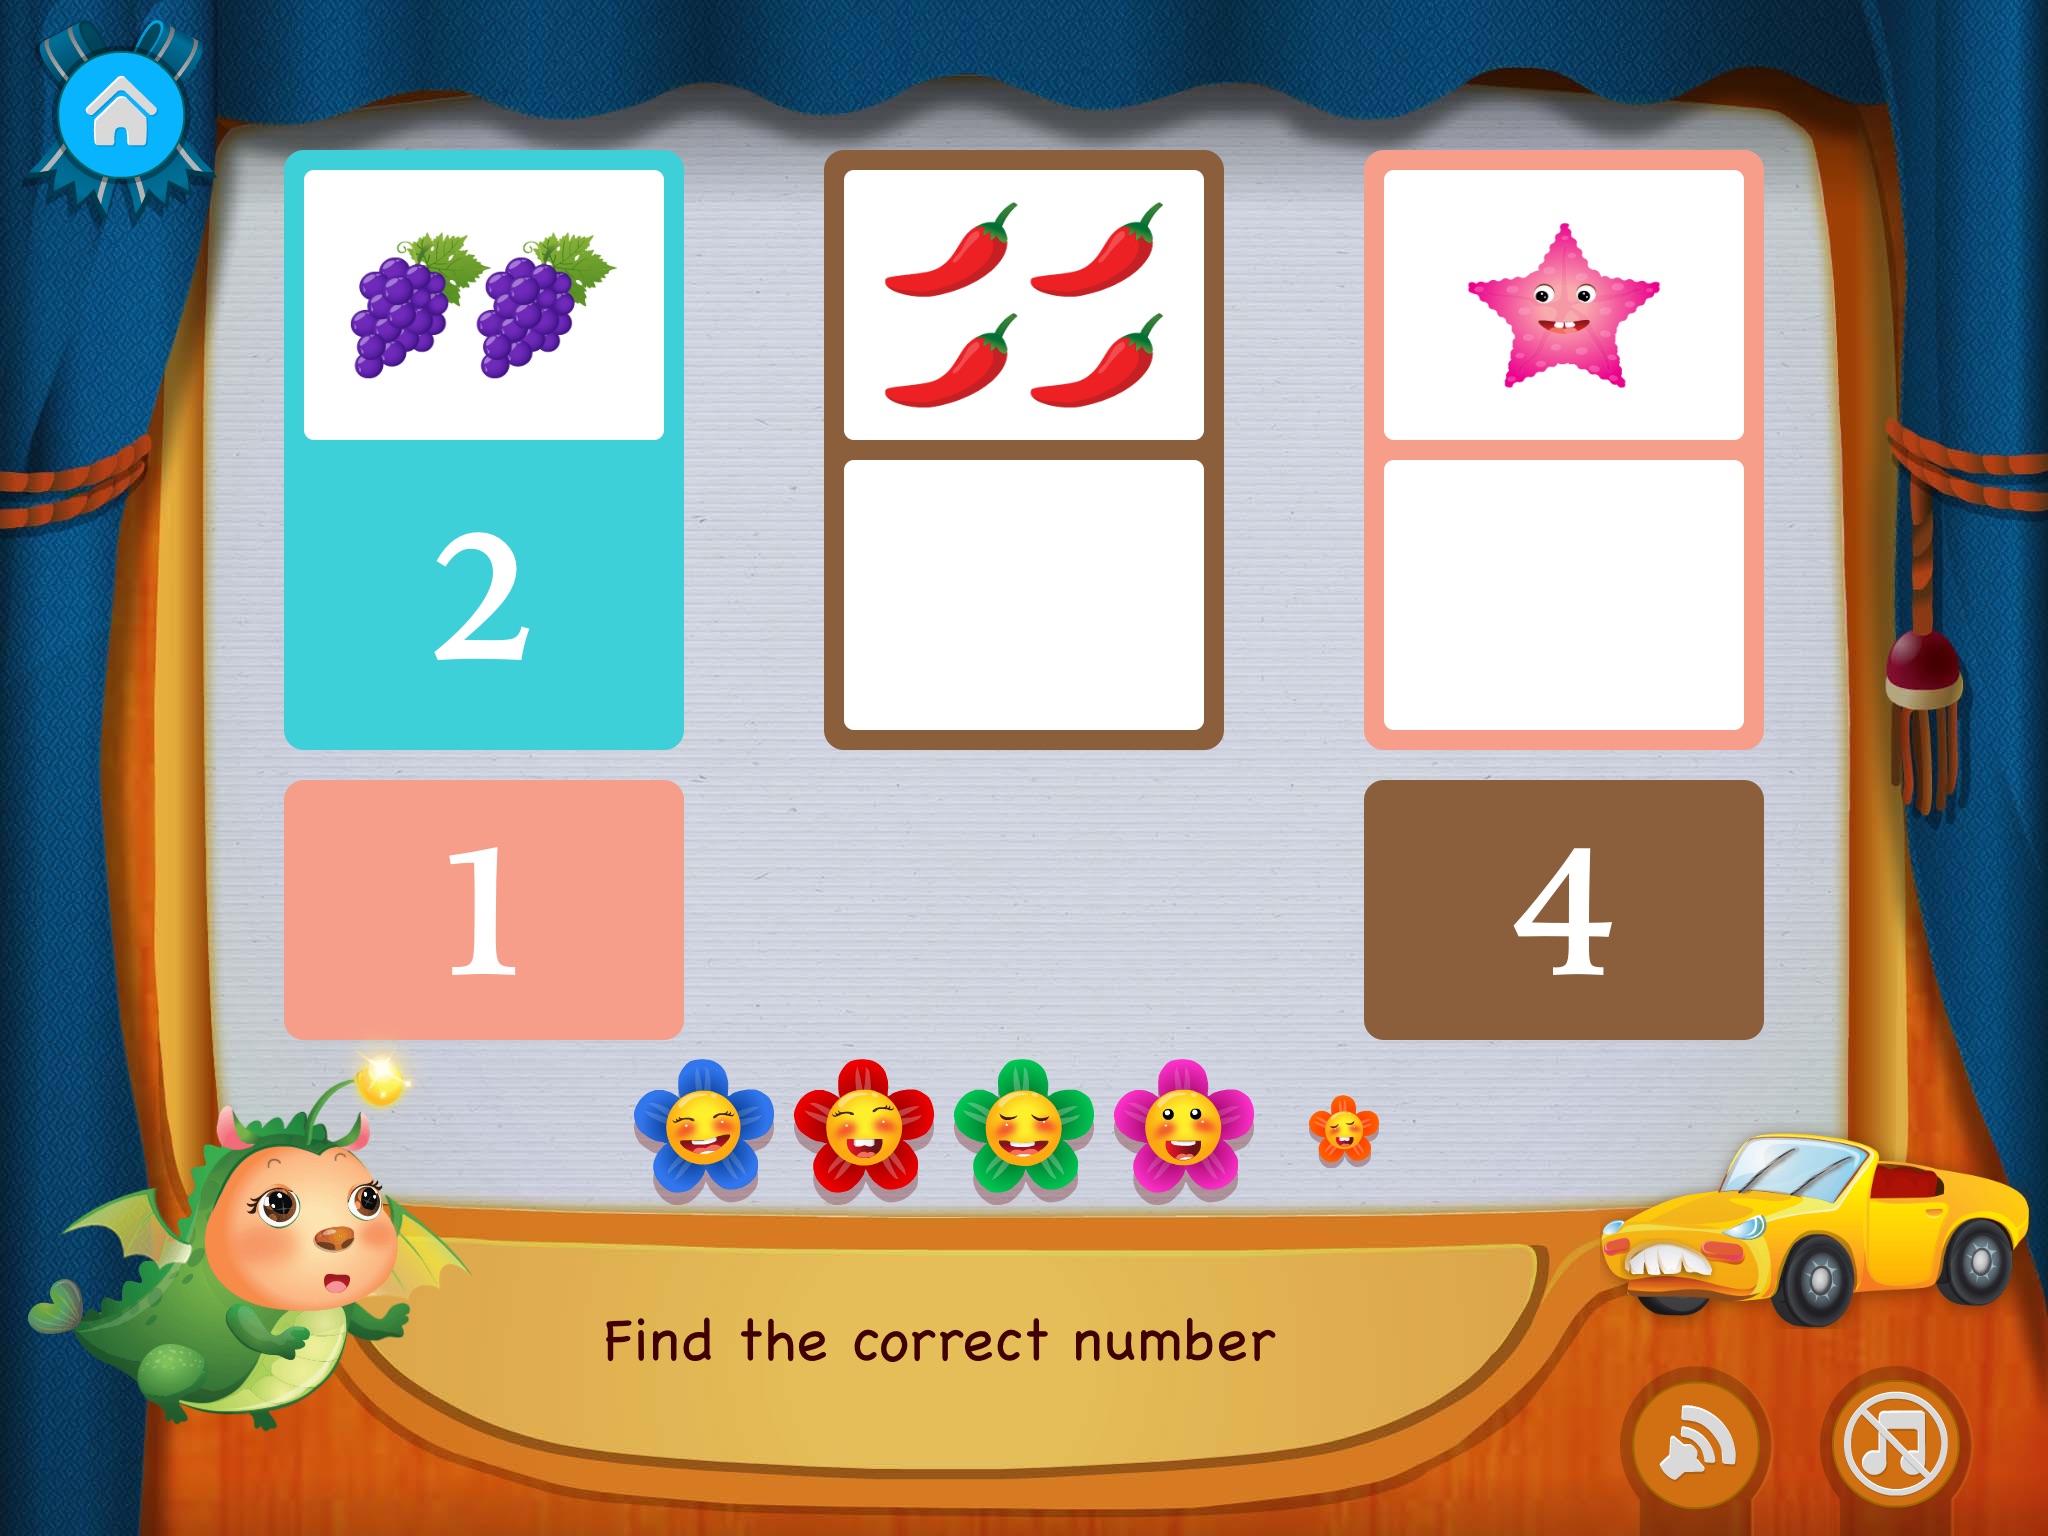 Preschool & Kindergarten Learning - 20 Education Games for Kids screenshot 4